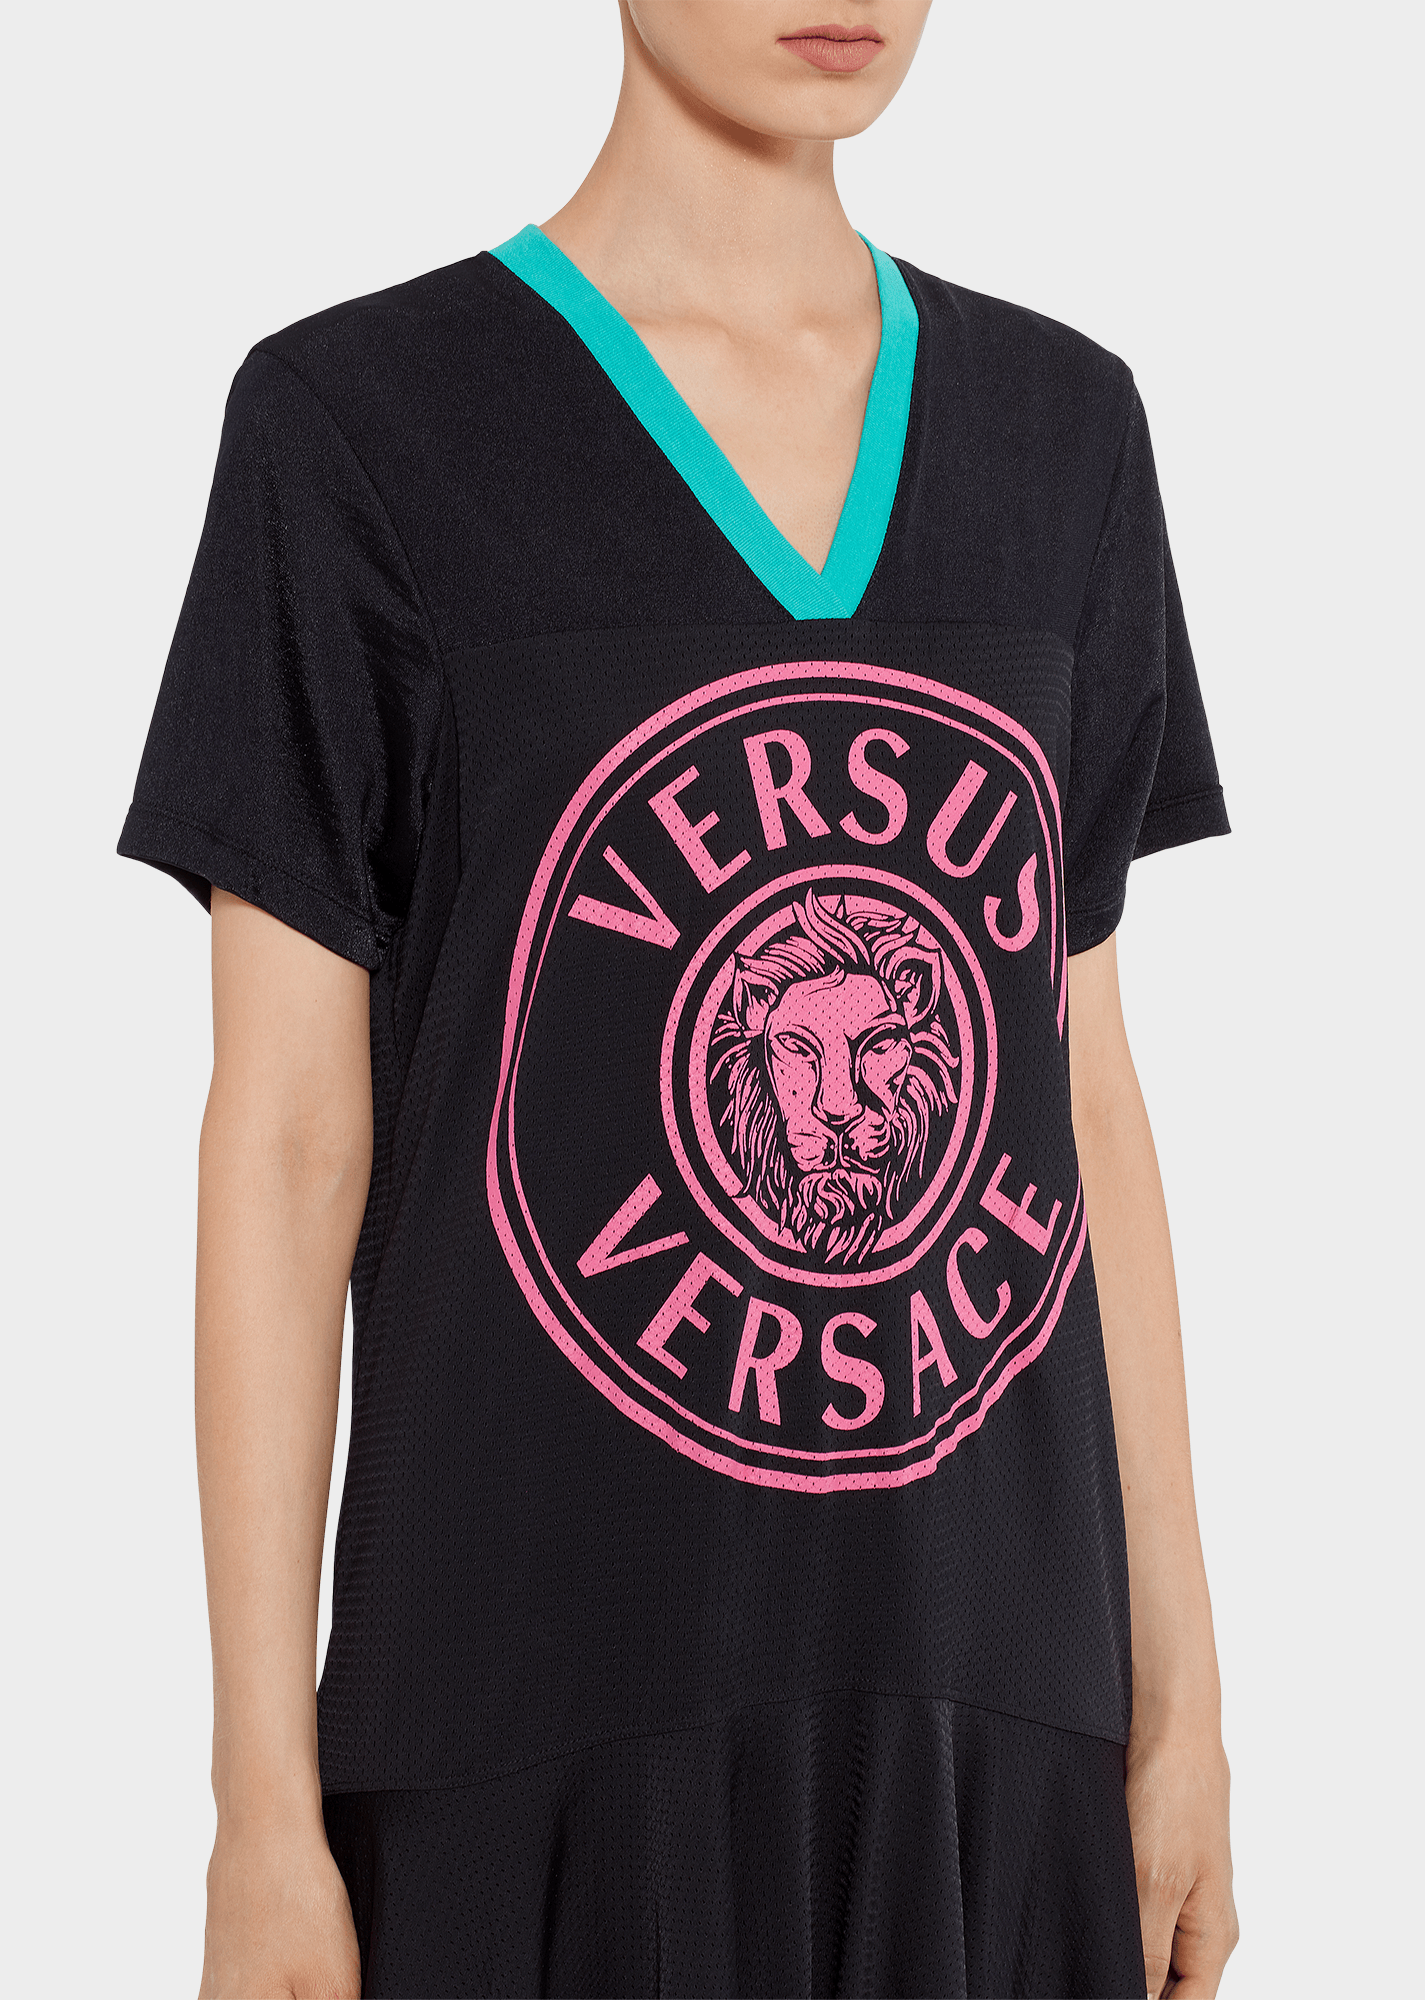 Versace Lion Logo - Versus Versace Contrast Lion Head Logo Dress for Women. US Online Store